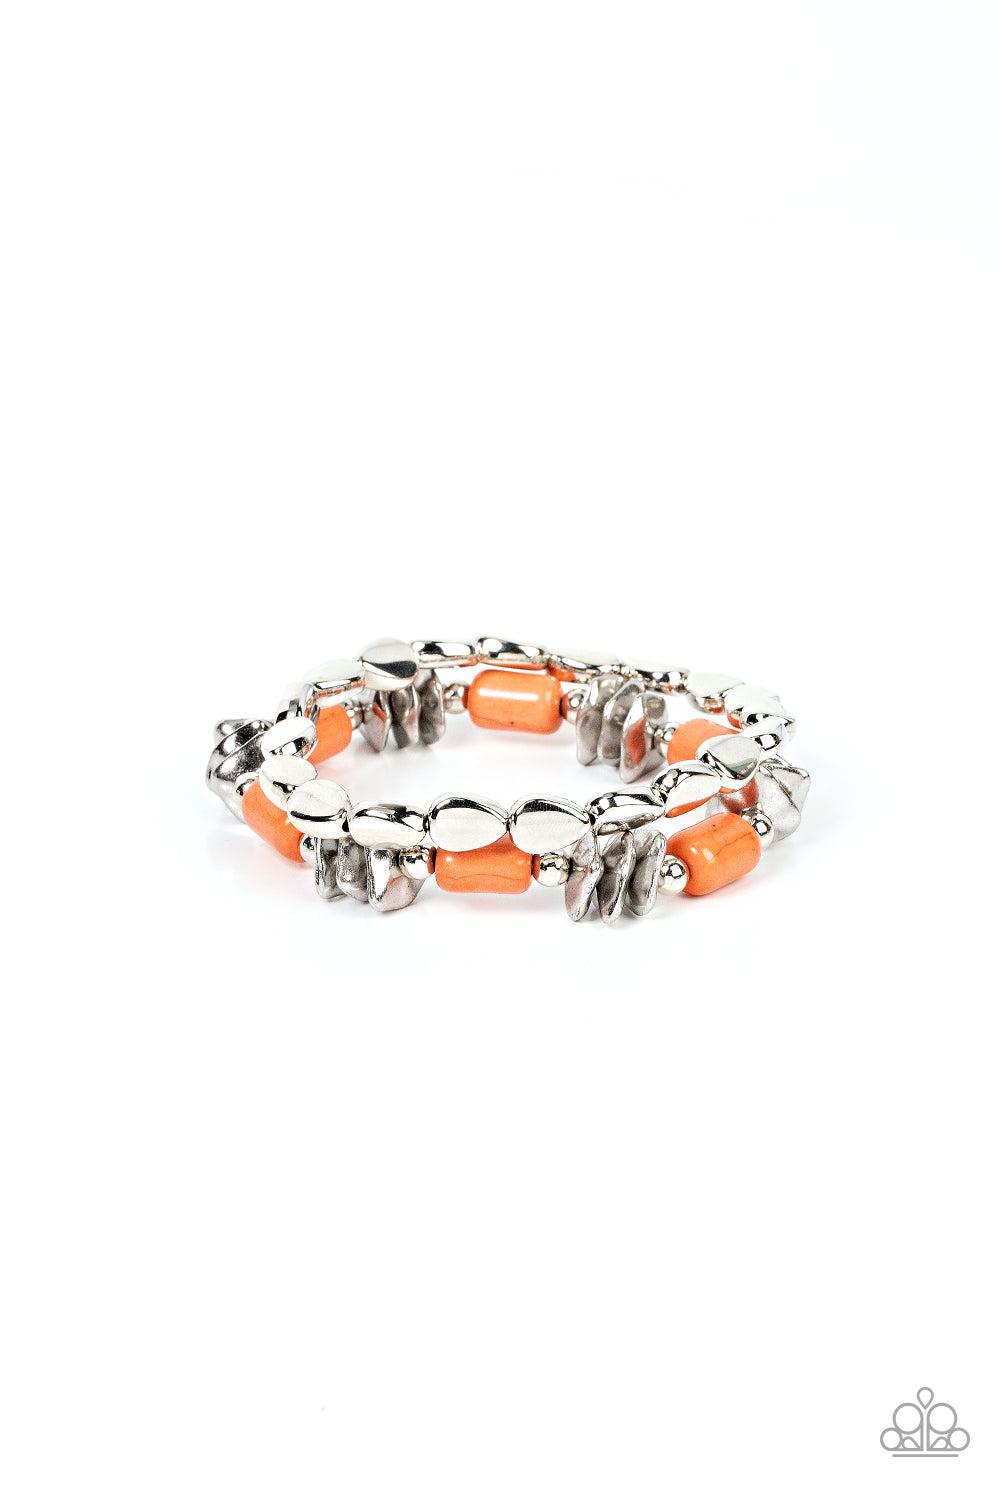 Canyon Cavern Orange Stone Bracelet- lightbox - CarasShop.com - $5 Jewelry by Cara Jewels